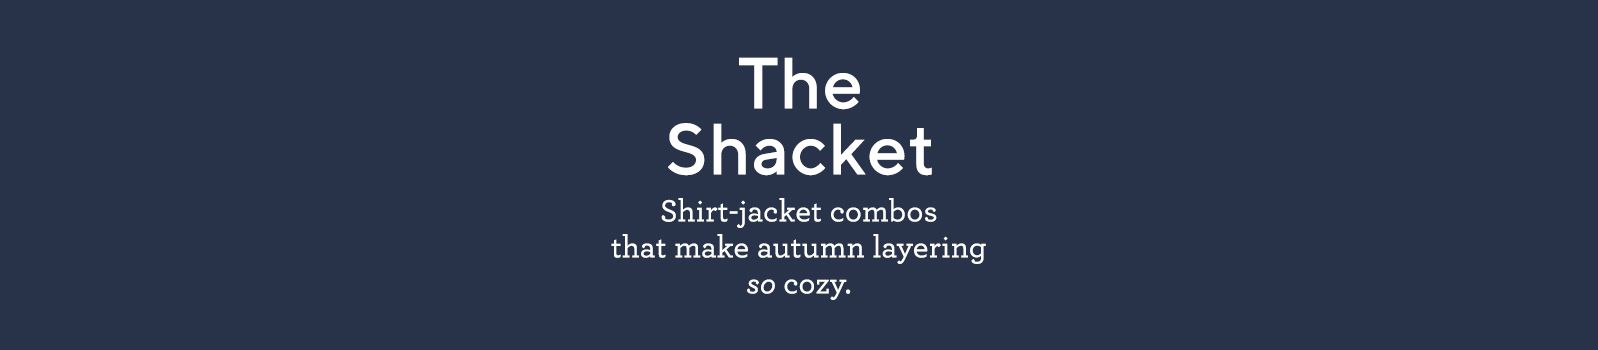 The Shacket Shirt-jacket combos that make spring layering a breeze.